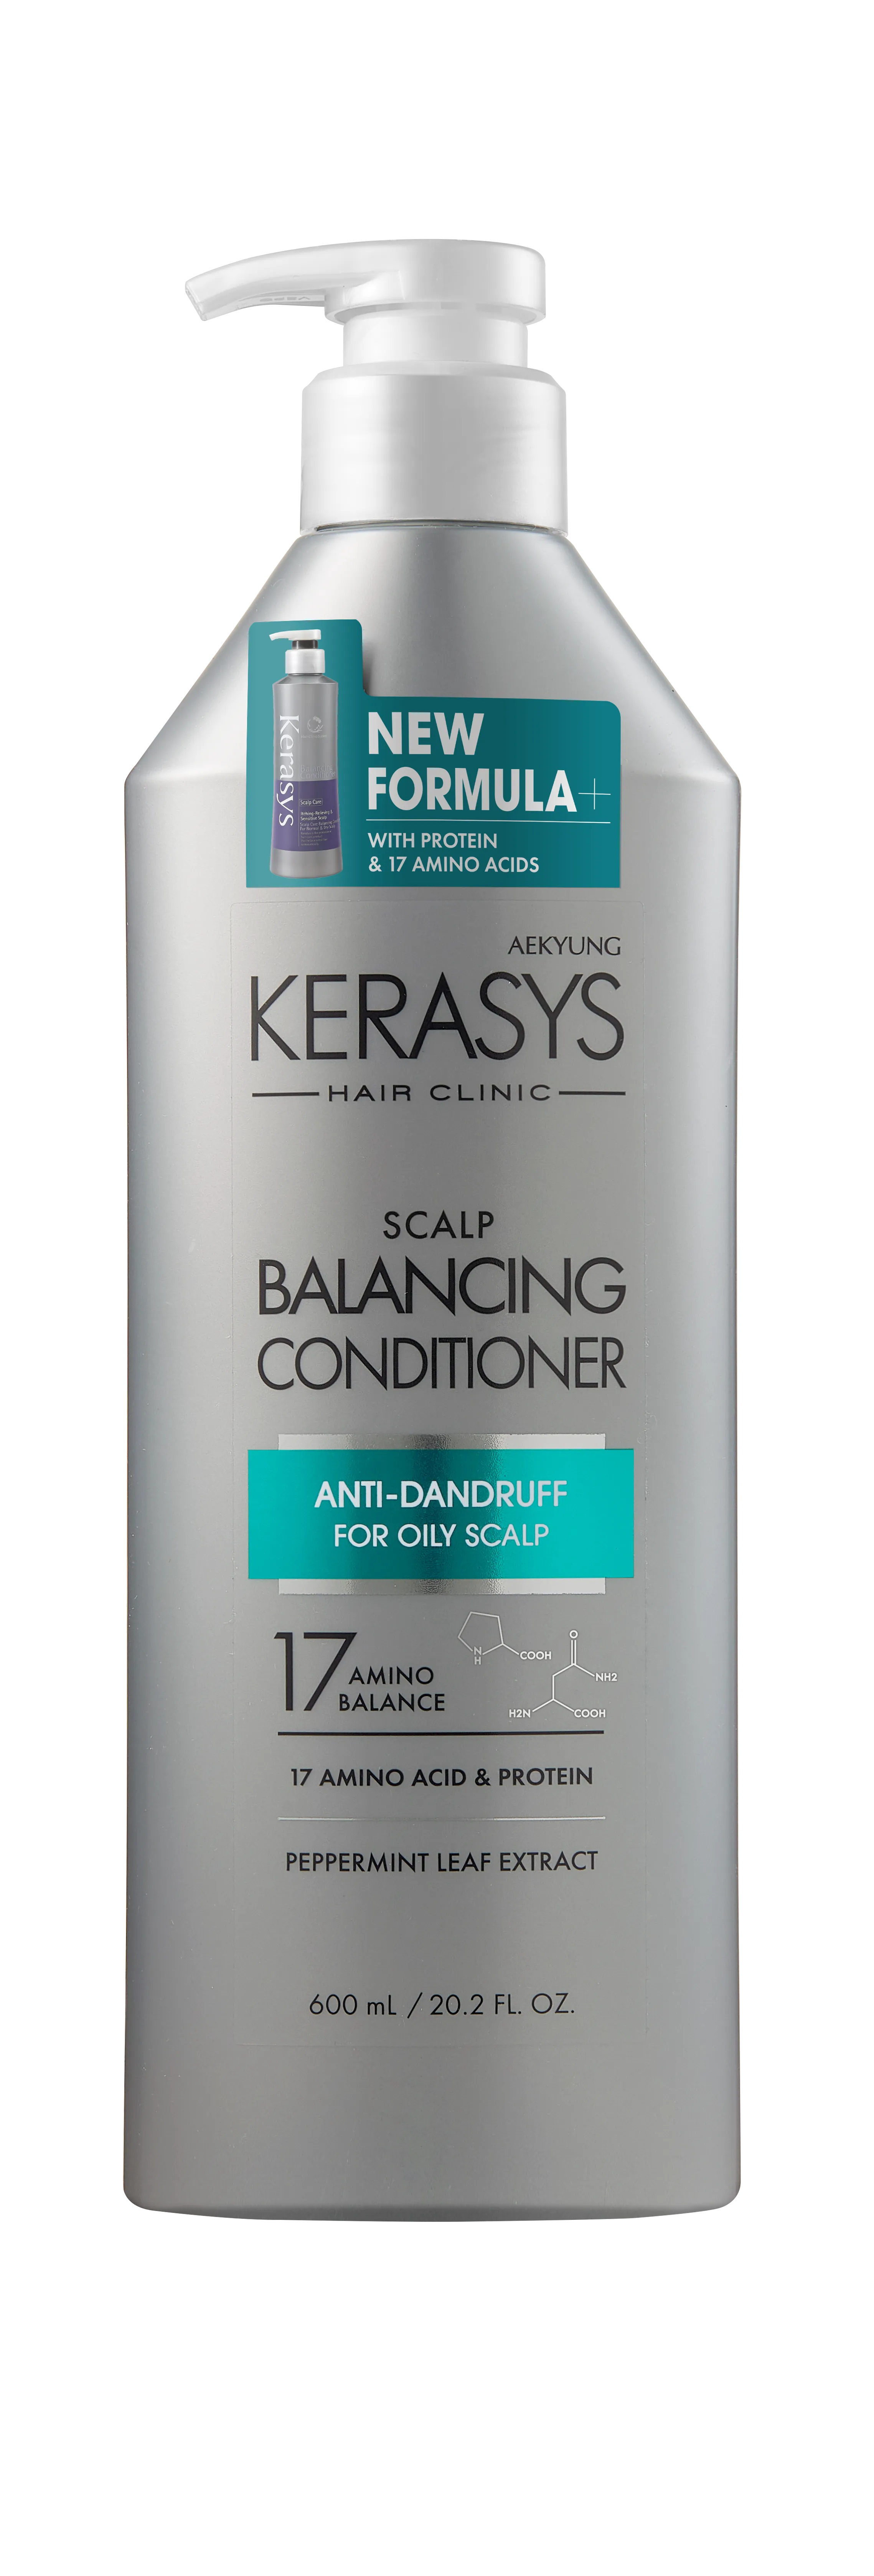 Aekyung Kerasys Hair Clinic Scalp Balancing Кондиционер для волос уход за жирной кожей головы 600 мл